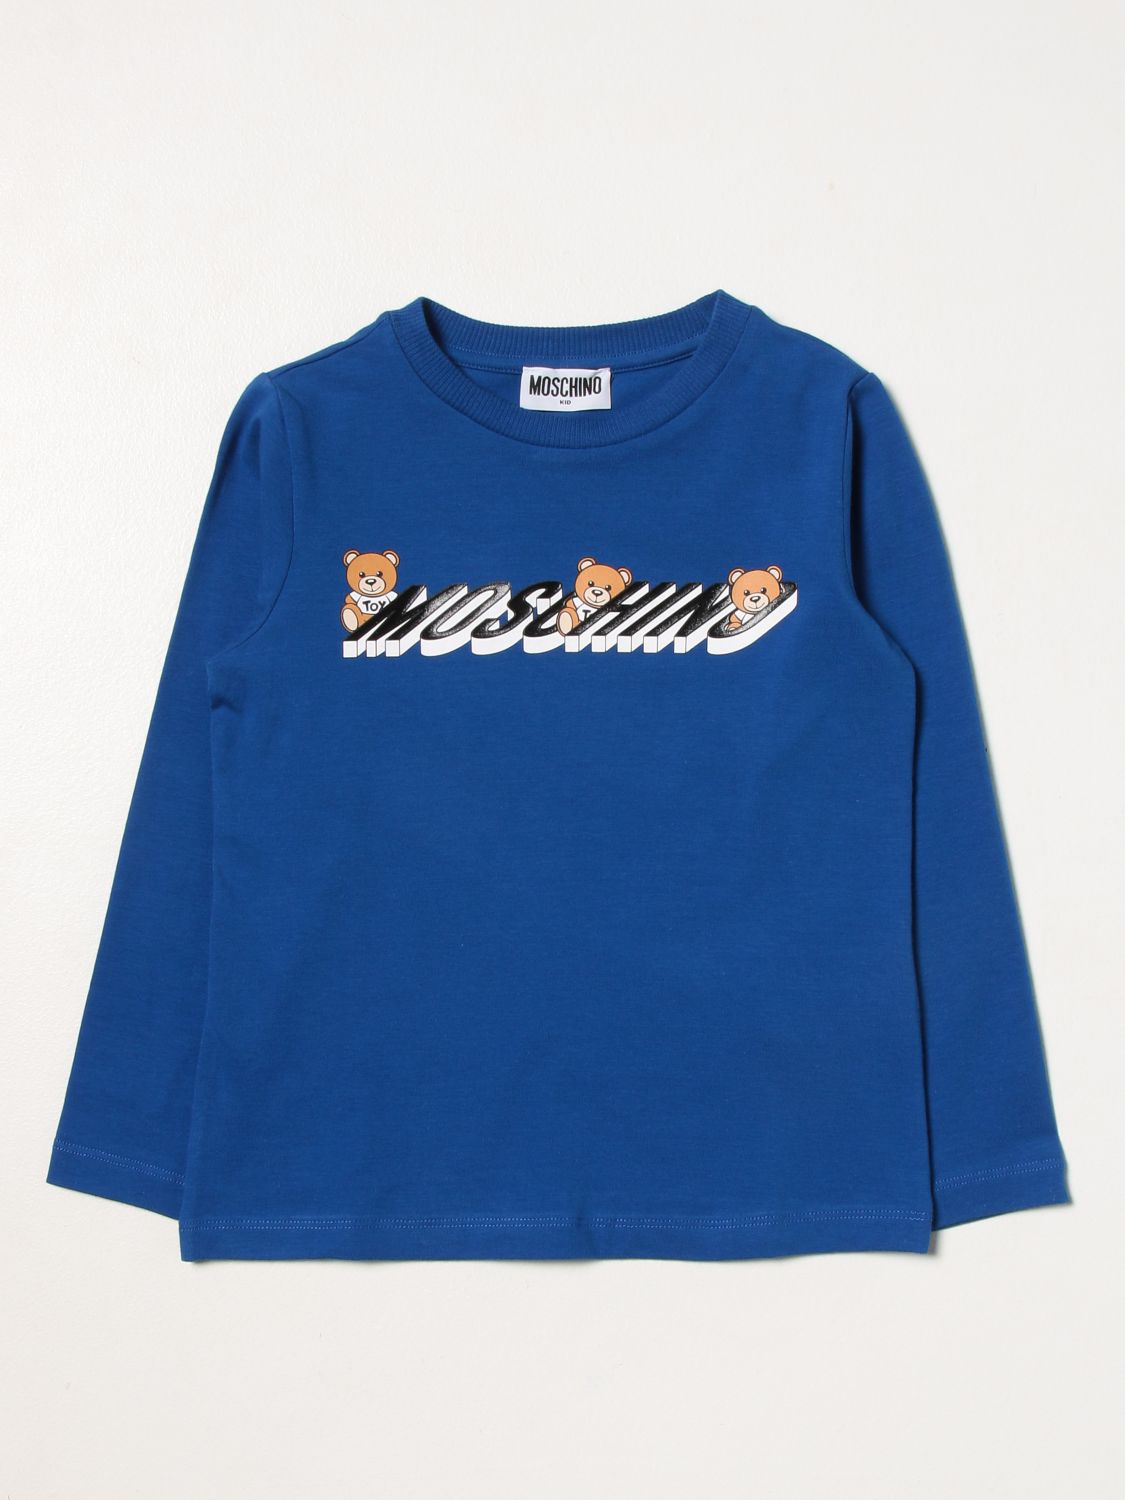 MOSCHINO KID: T-shirt with logo - Blue | Moschino Kid t-shirt HUO00F ...